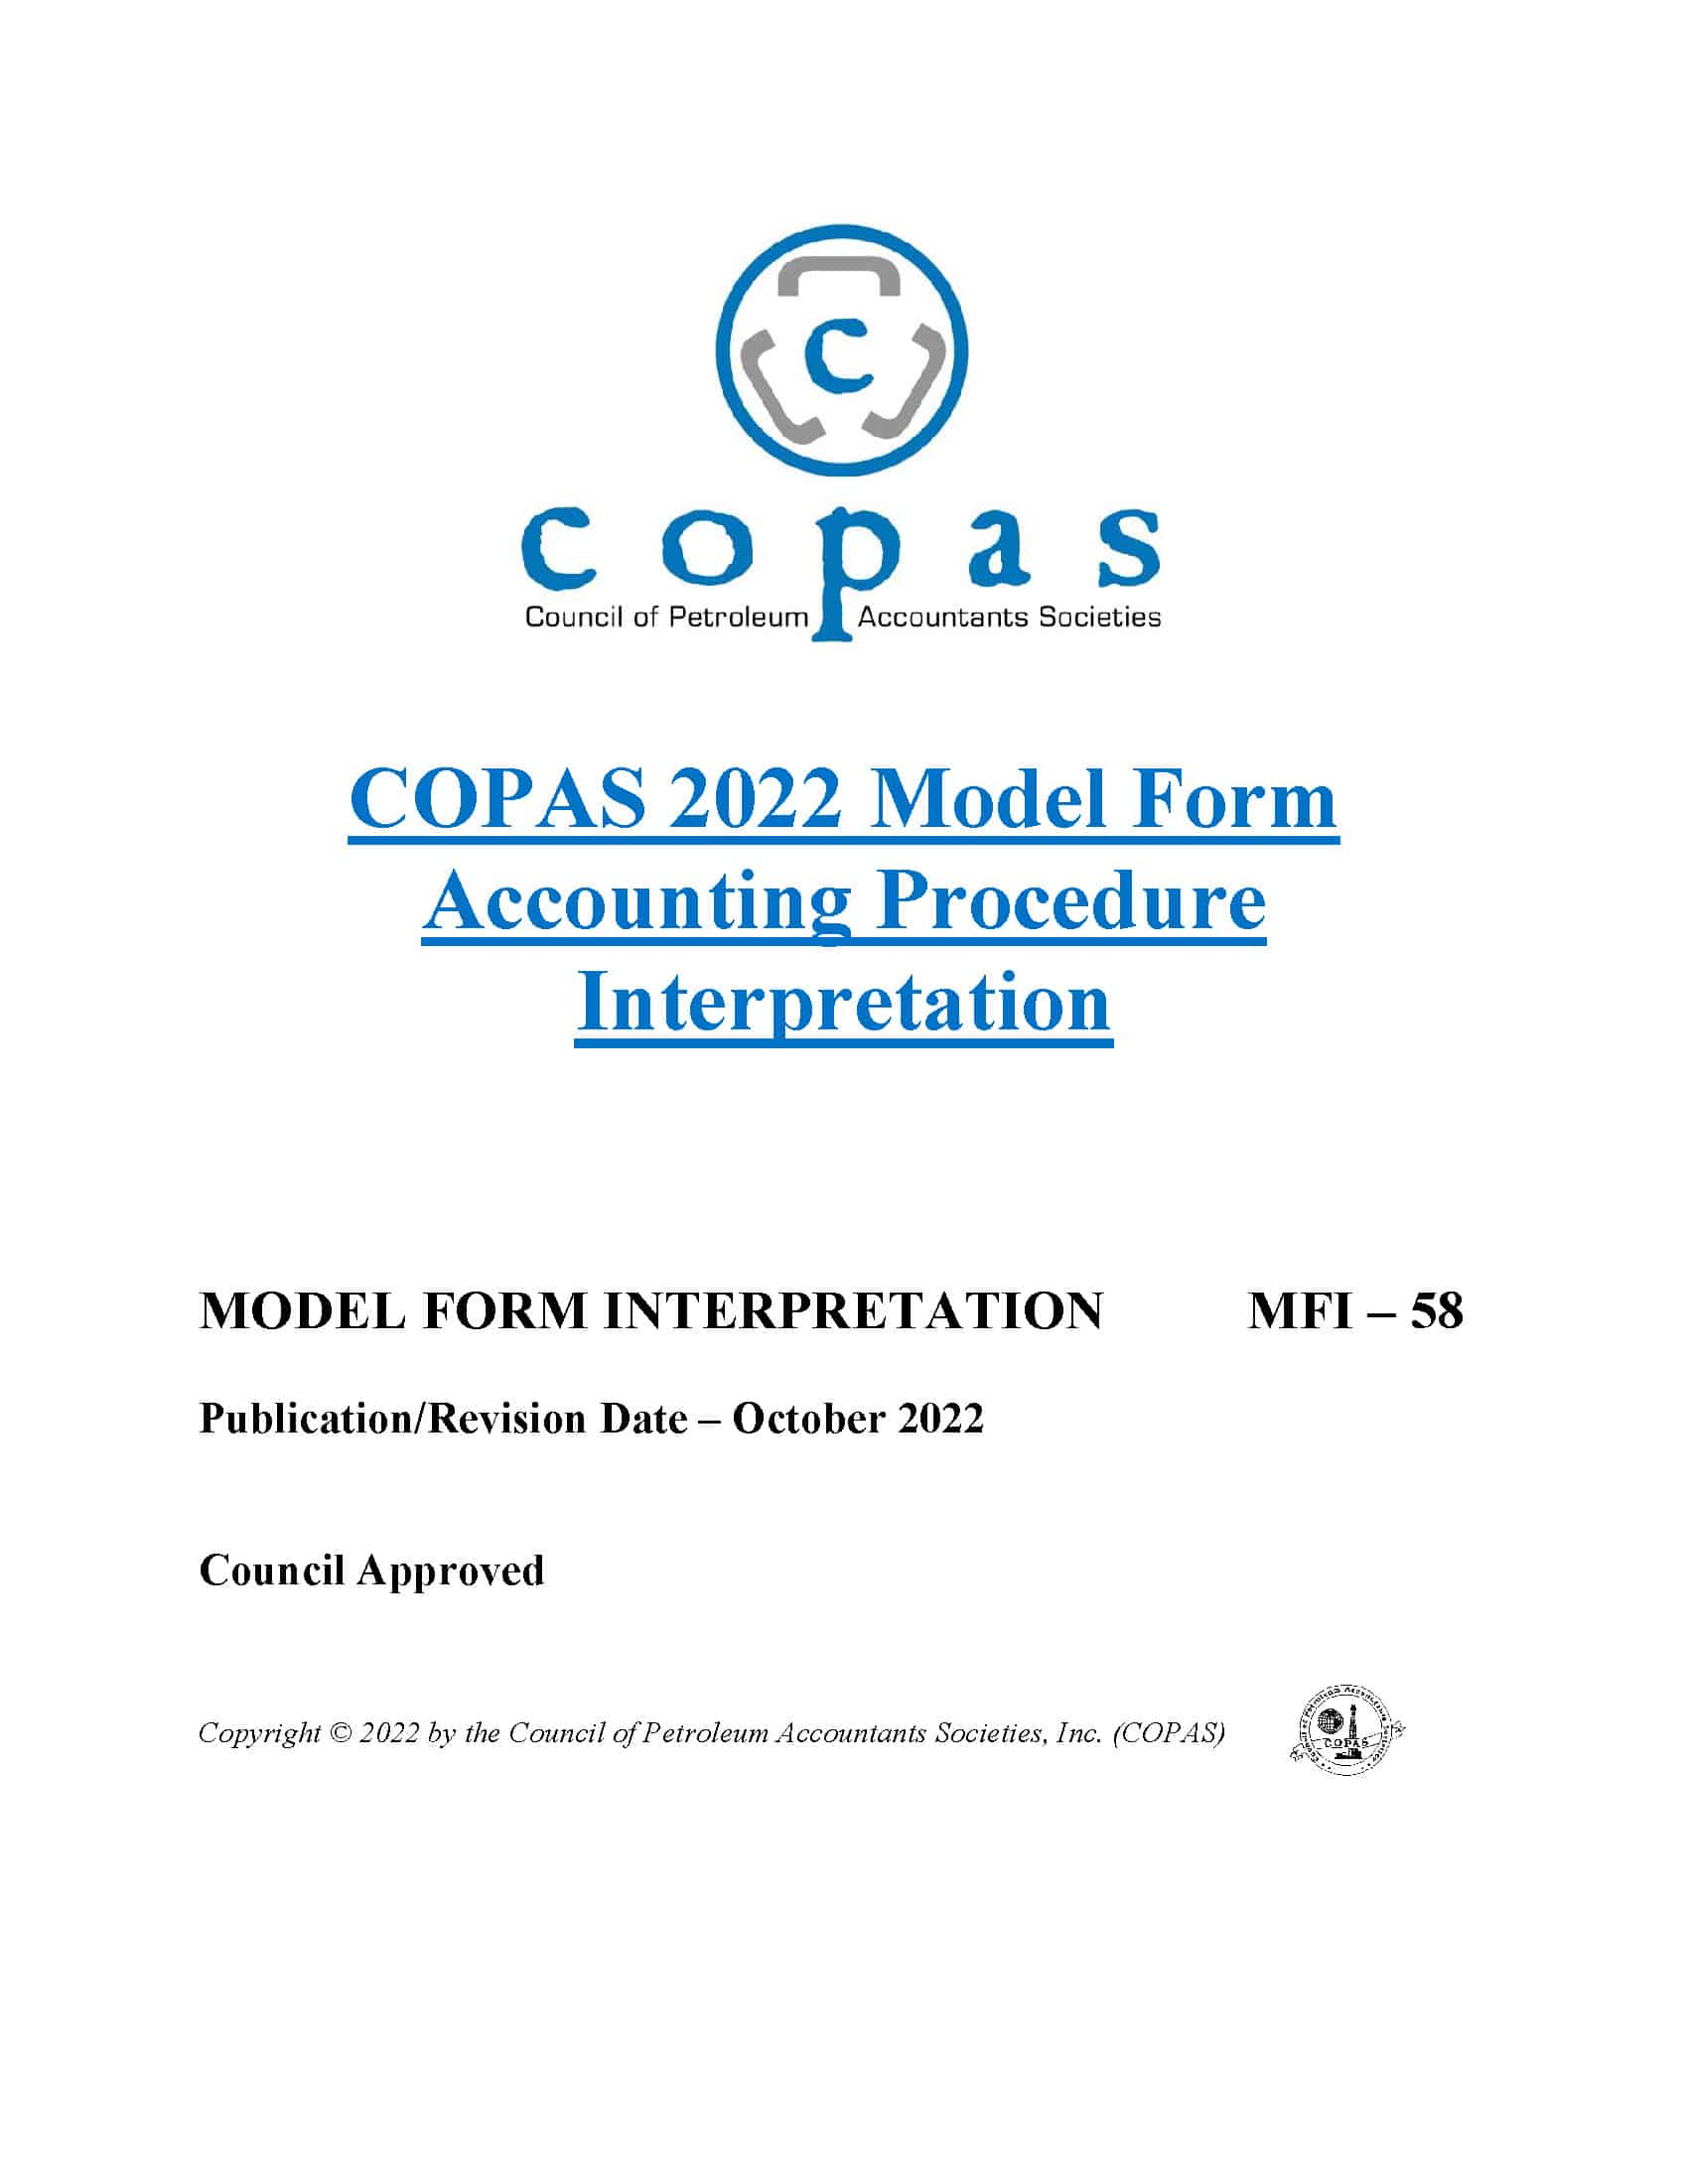 MFI-58 2022 Model Form Accounting Procedure Interpretation